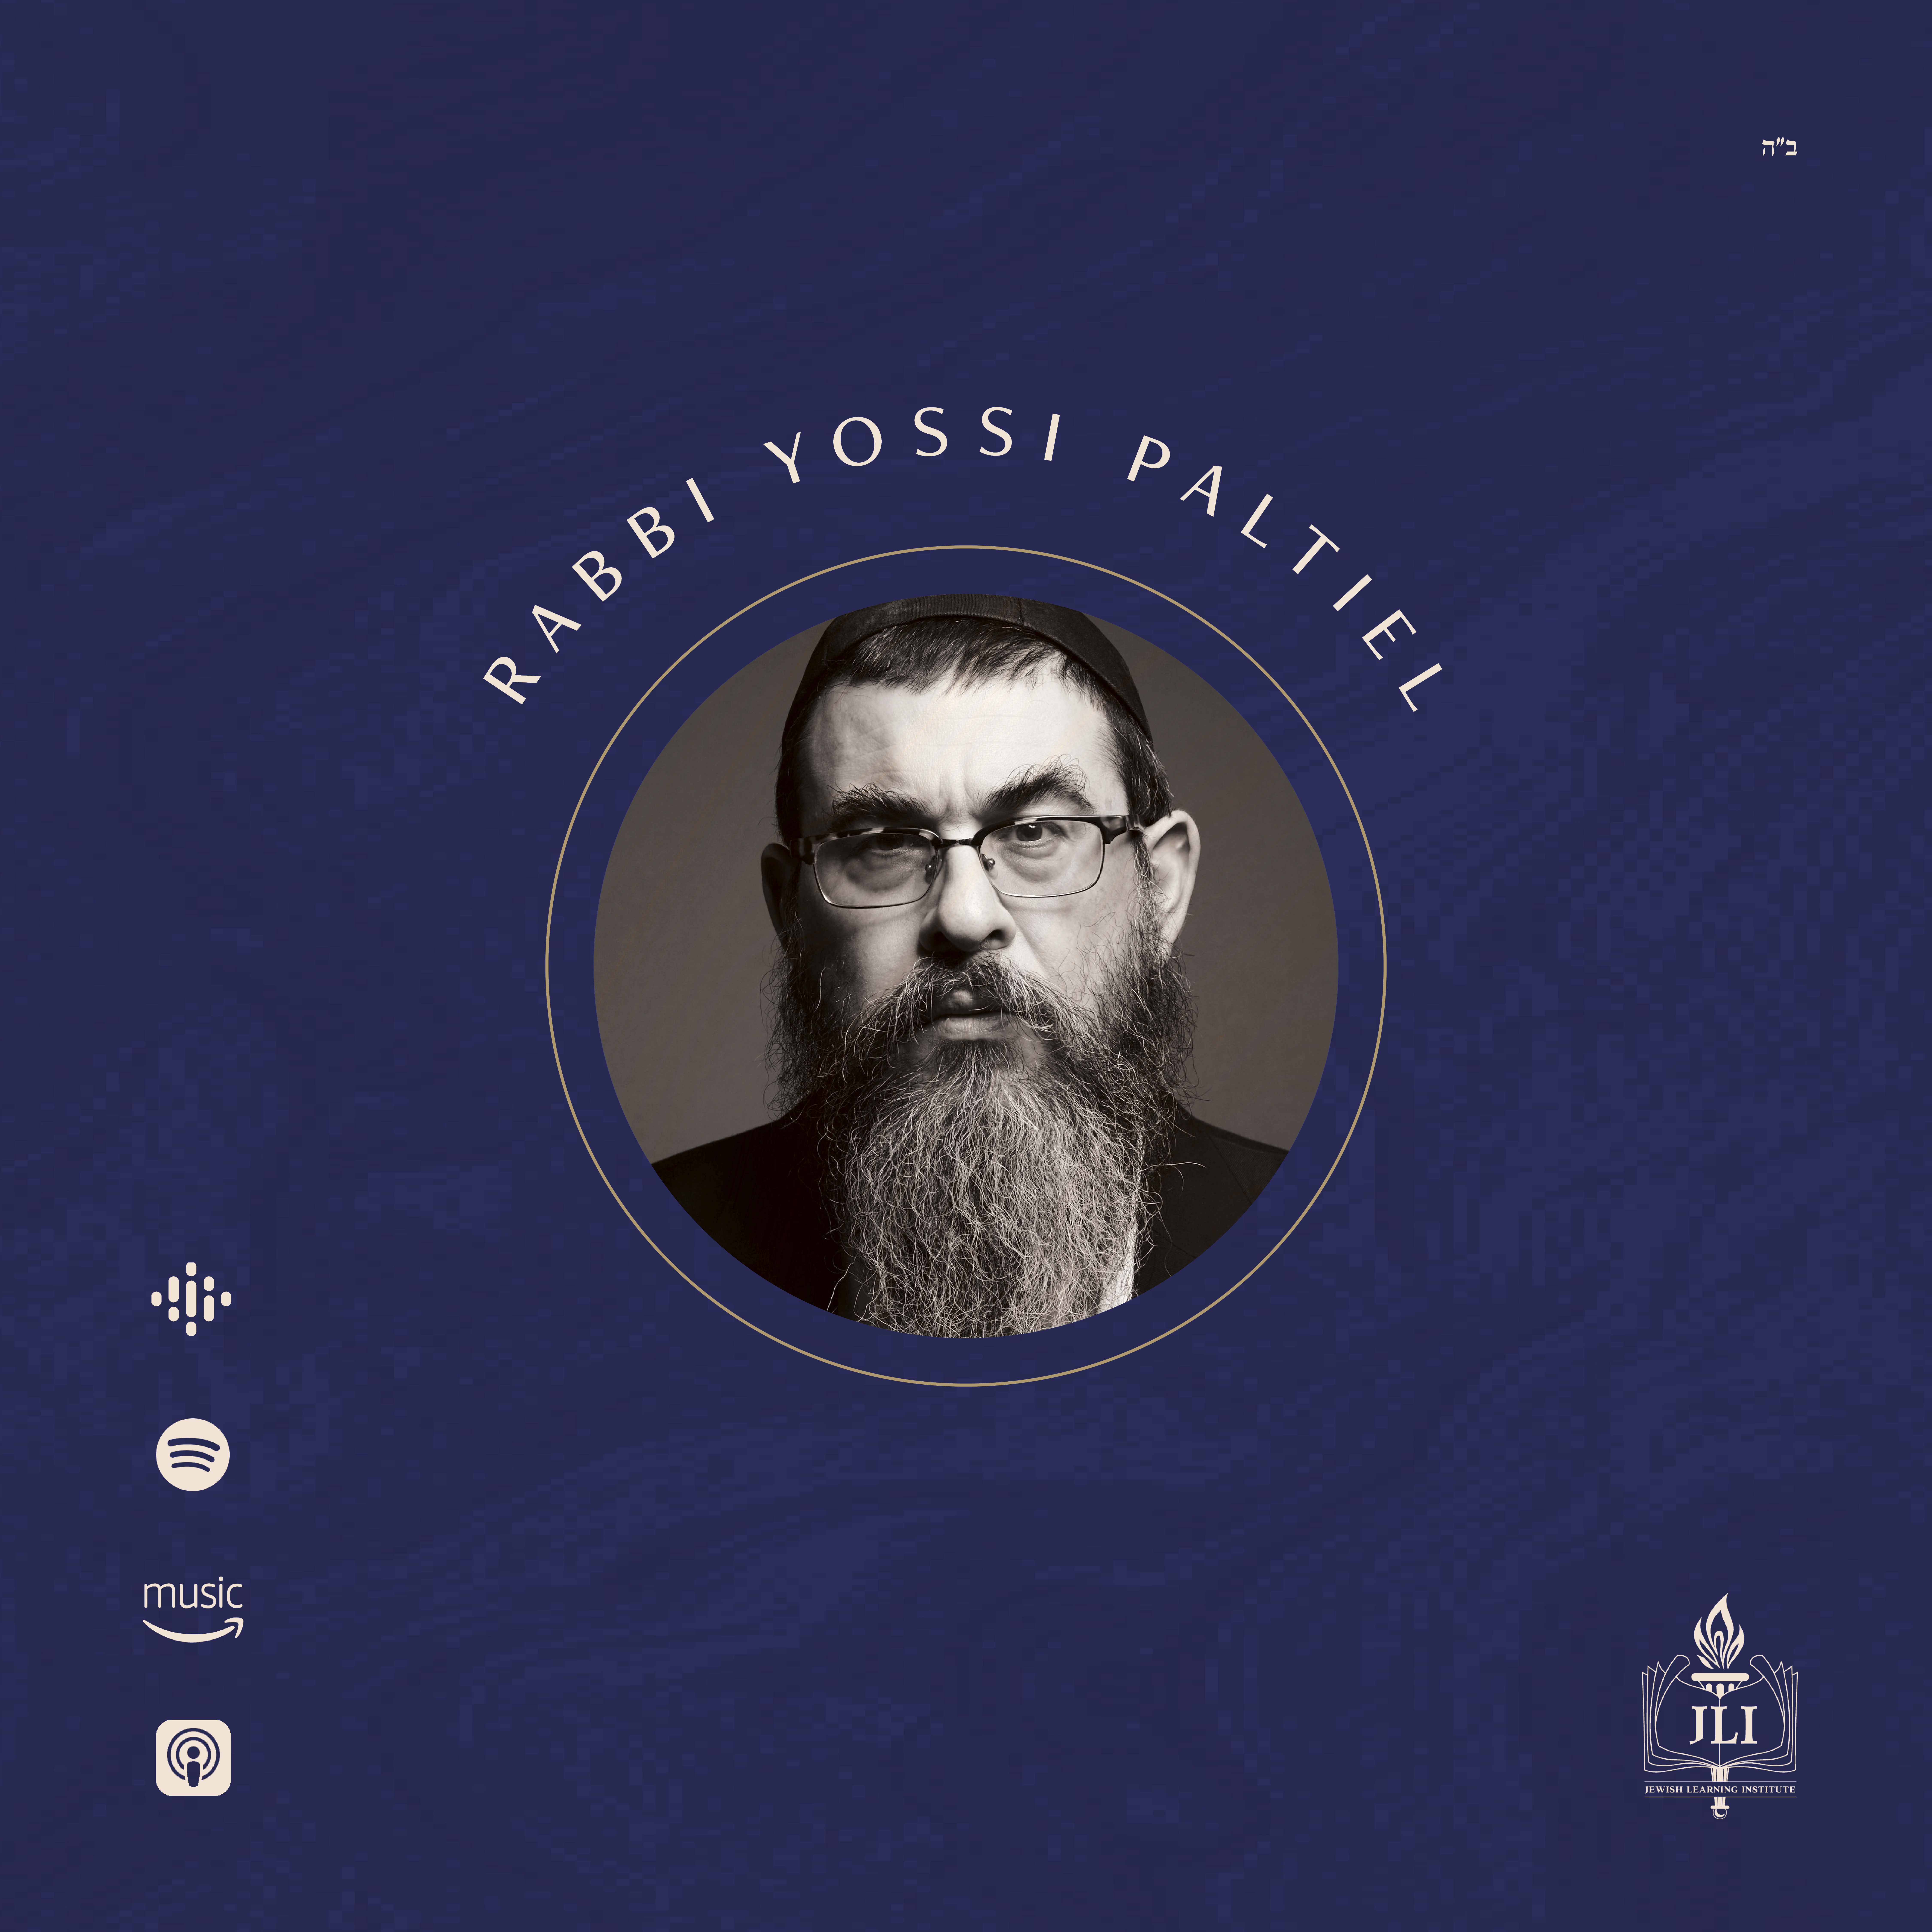 The Systematic Beauty of the Jewish Calendar - Rabbi Yossi Palteil